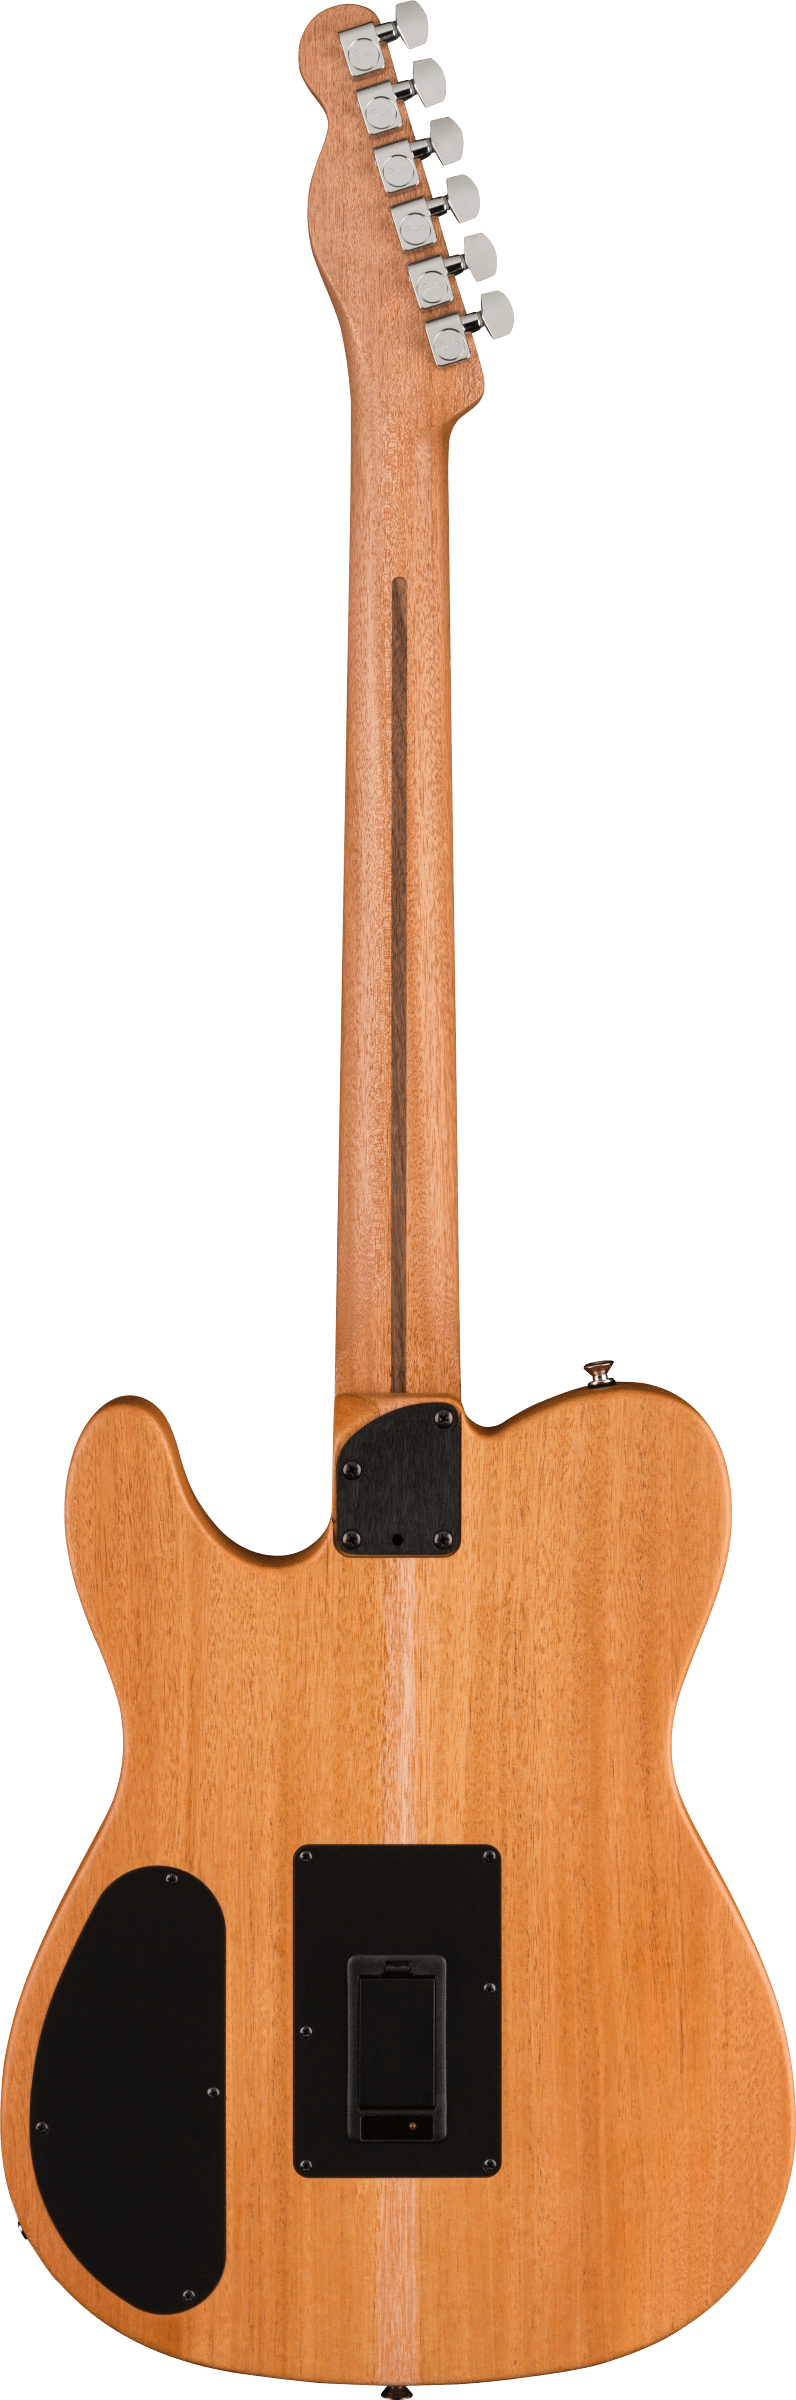 Fender Acoustasonic Player Telecaster Hybrid Guitar - Shadow Burst - Joondalup Music Centre